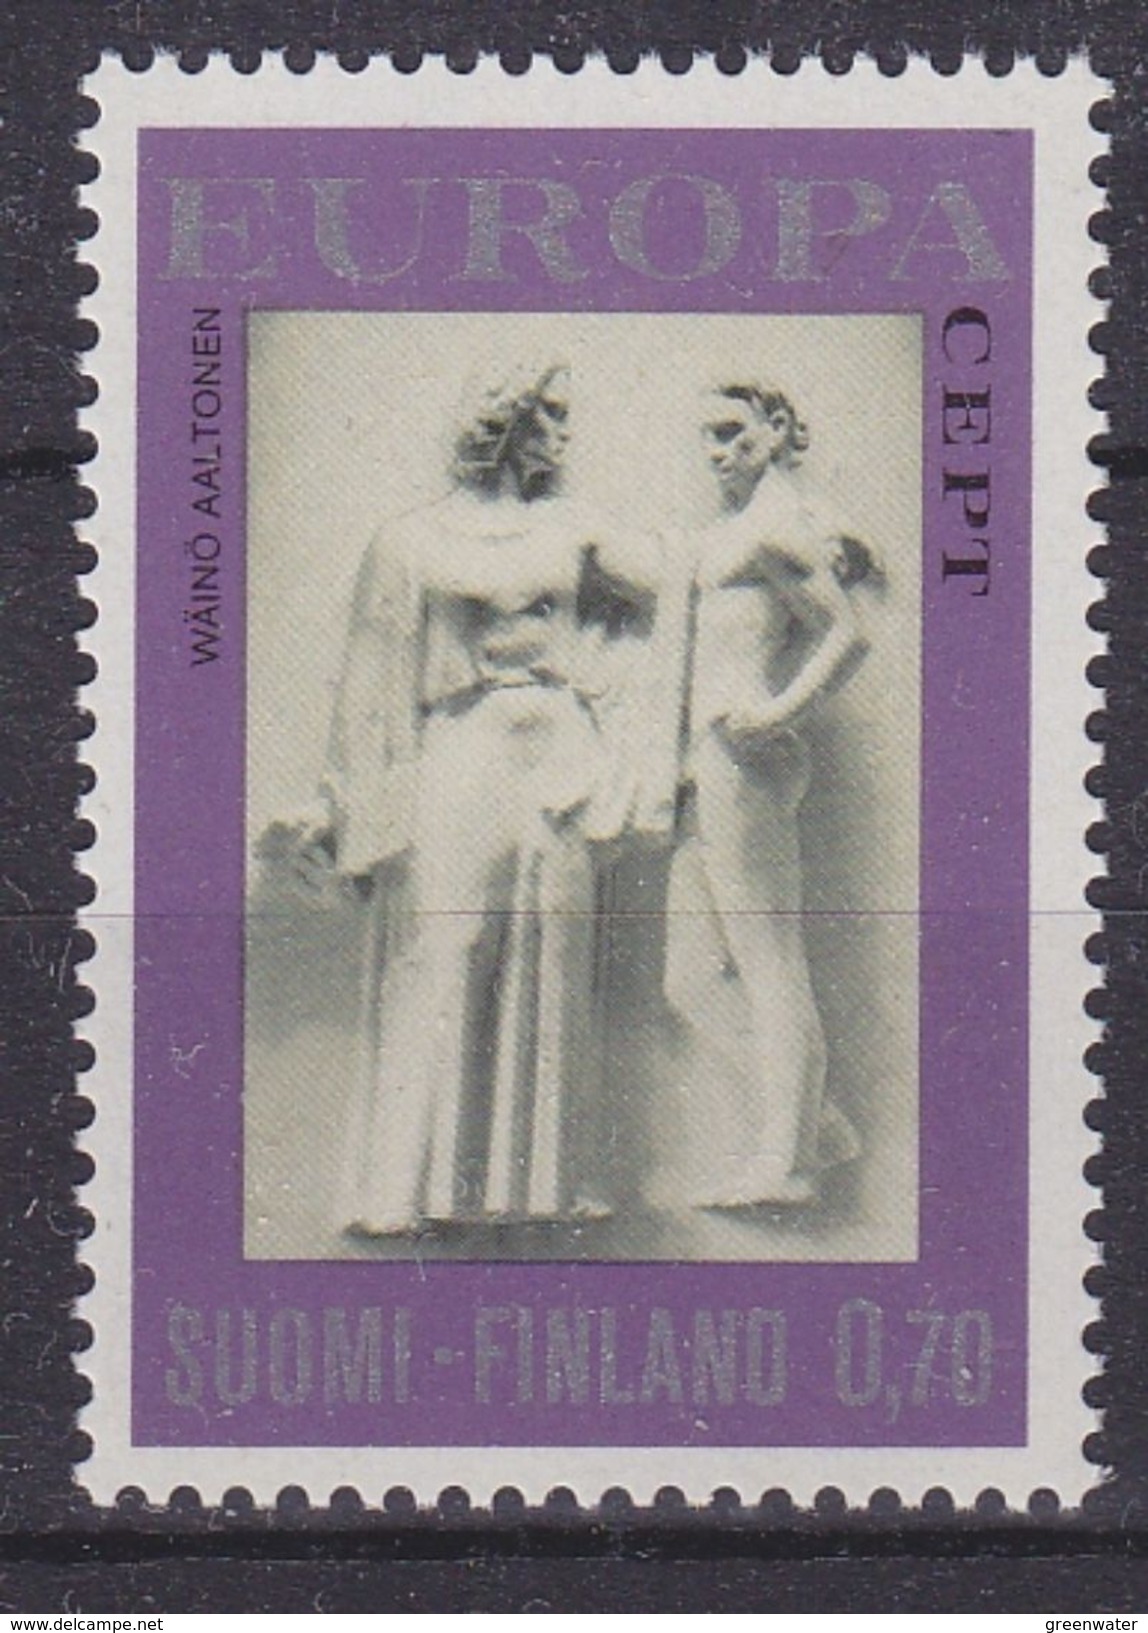 Europa Cept 1974 Finland 1v ** Mnh (36922T) - 1974